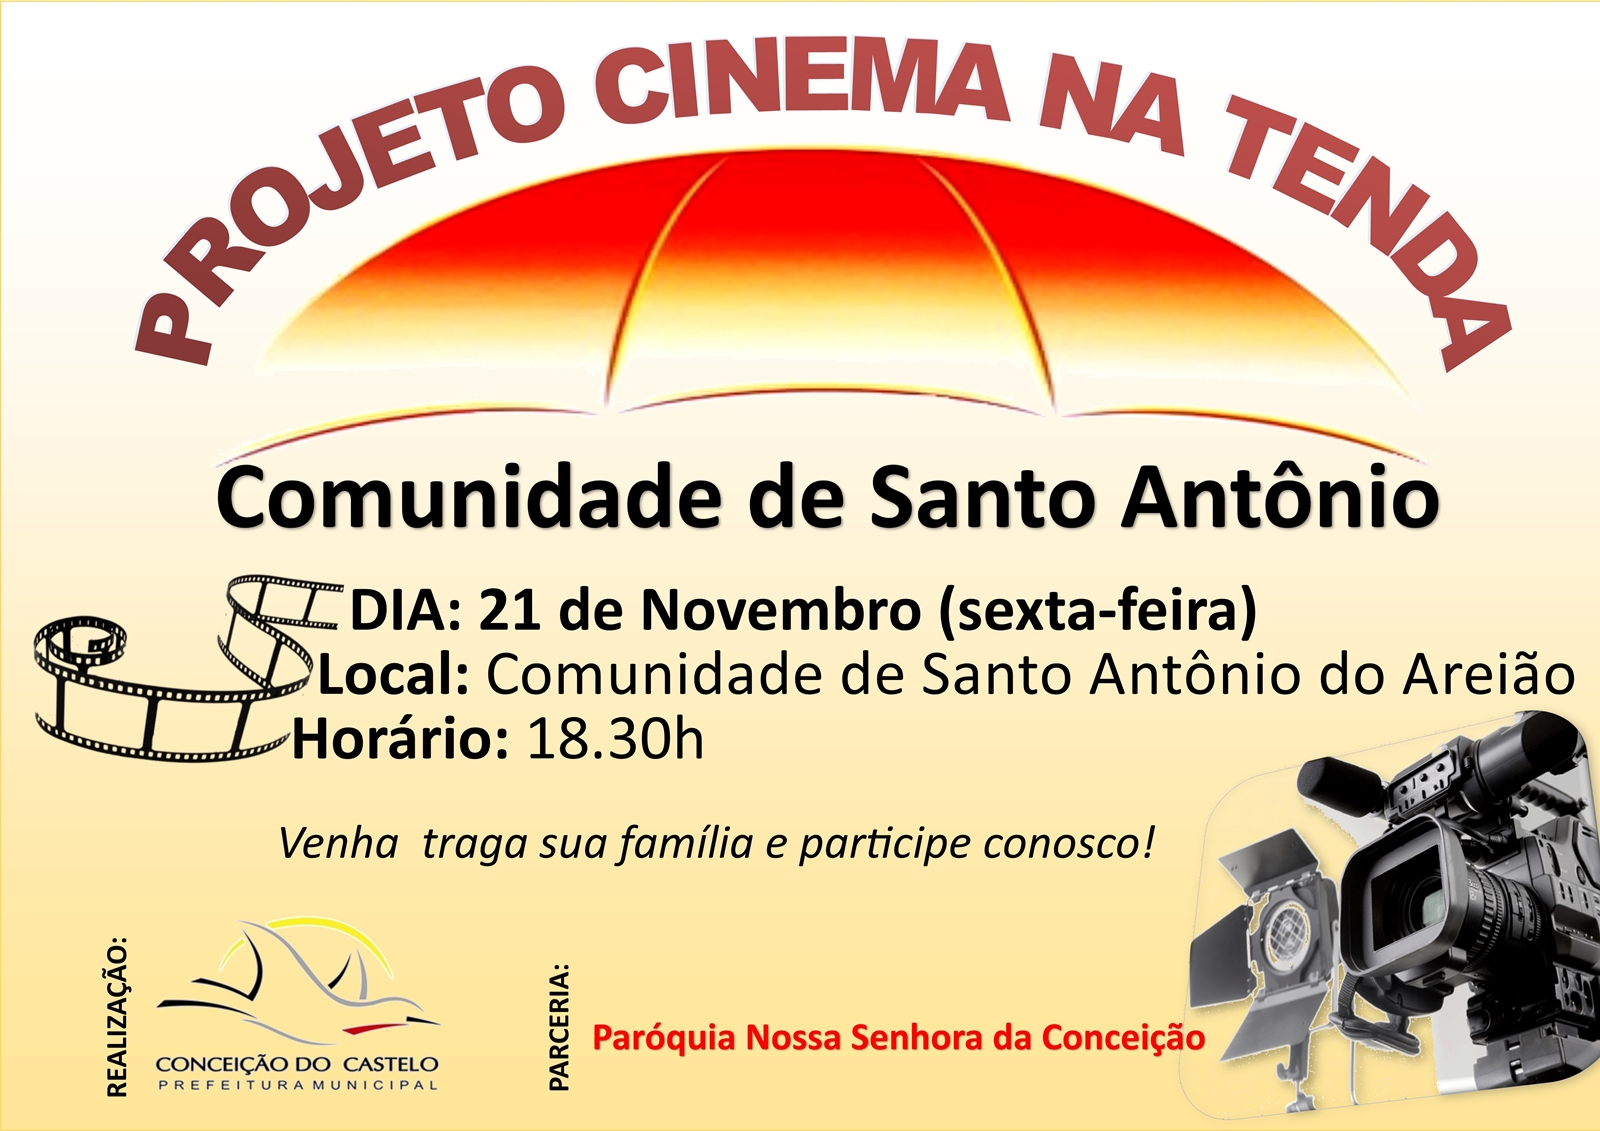 Comunidade de Santo Antônio terá o Projeto Cinema na Tenda nesta sexta-feira, 21